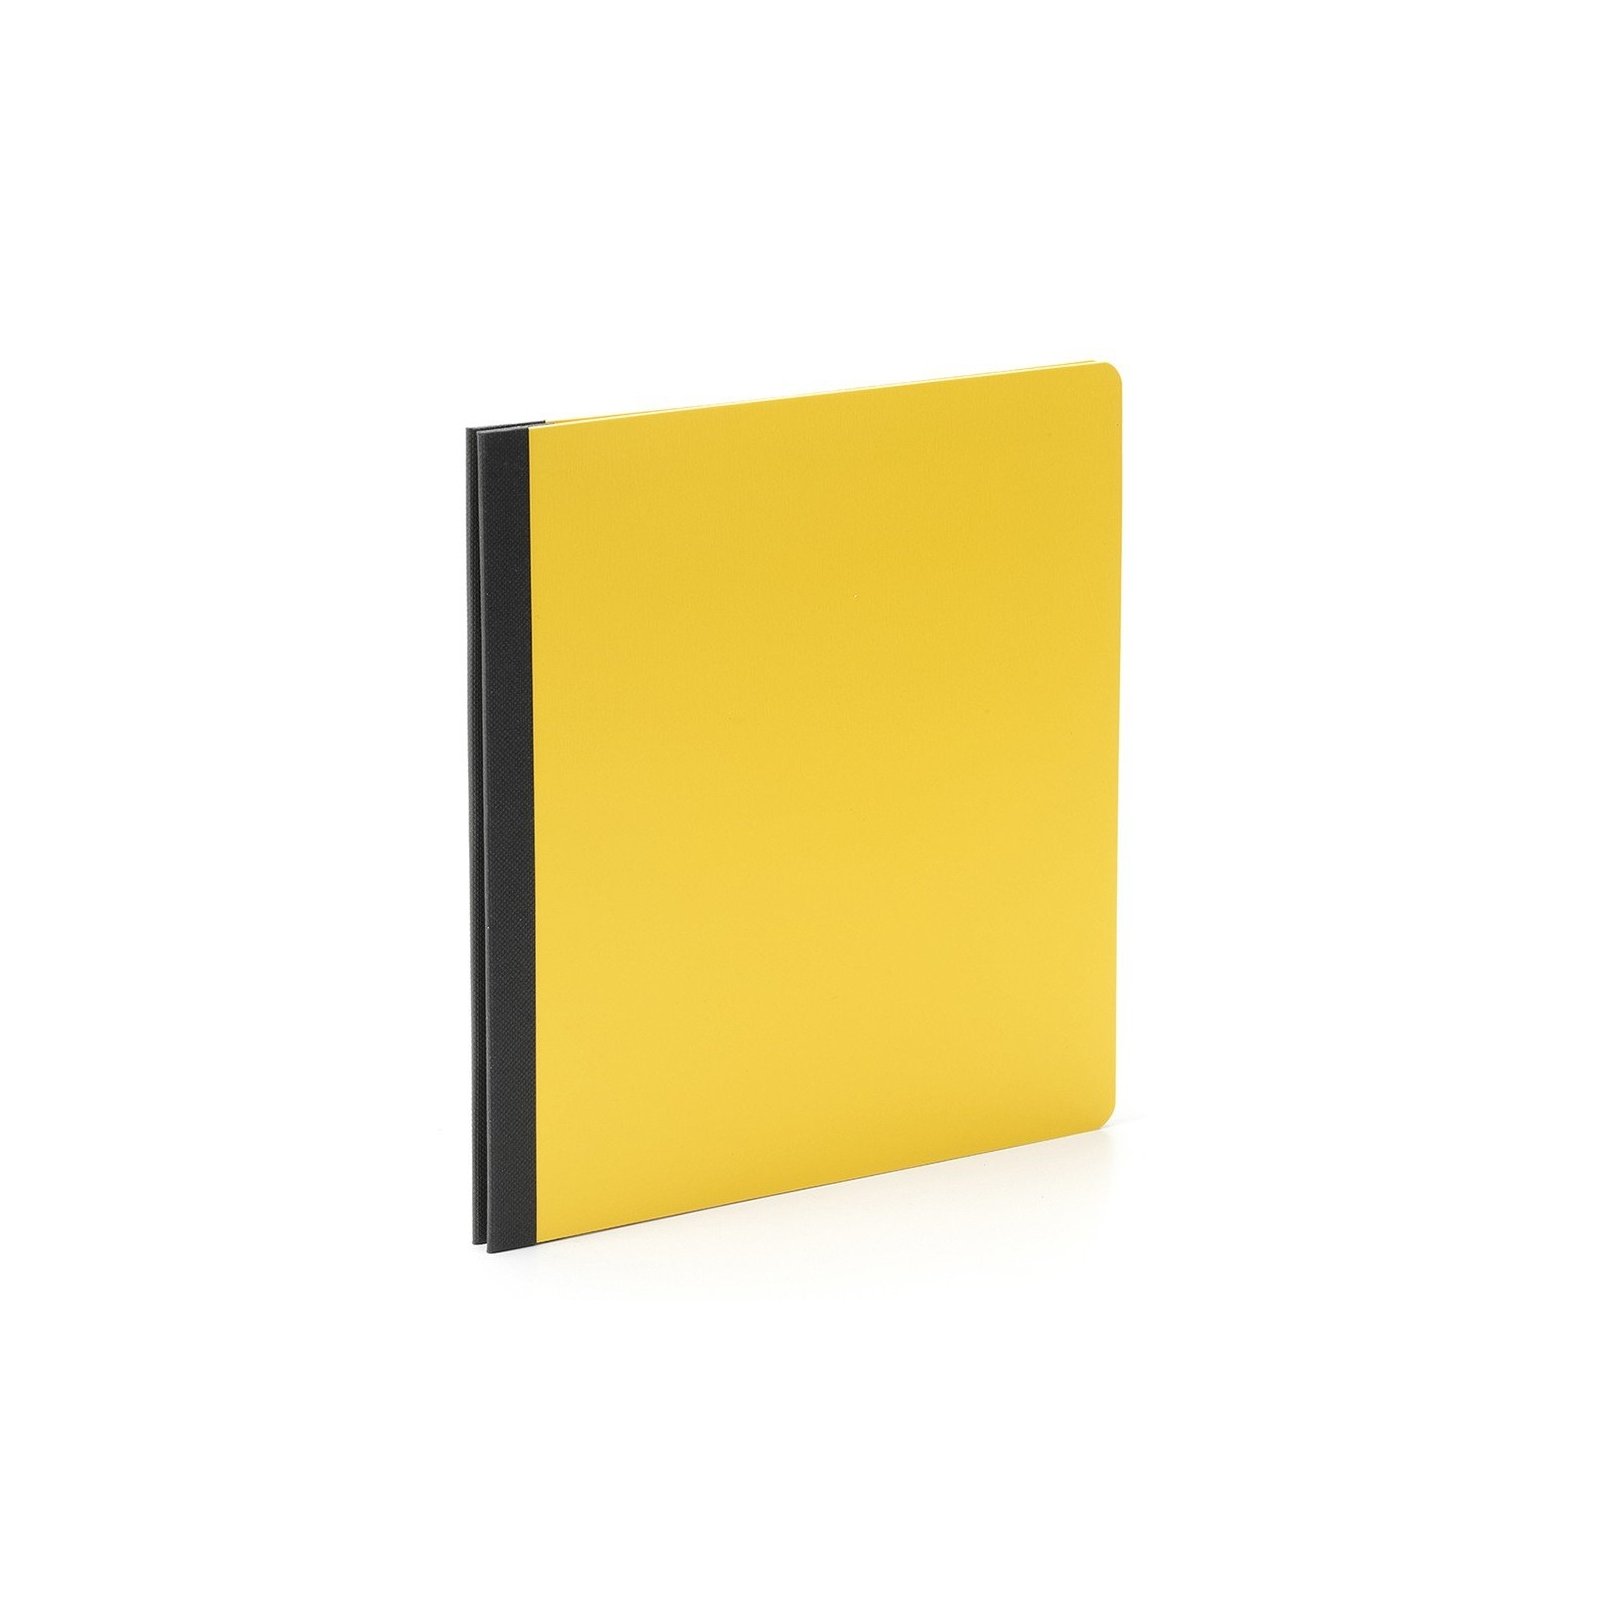 Flipbook - 15x20 - Yellow - Simple Stories